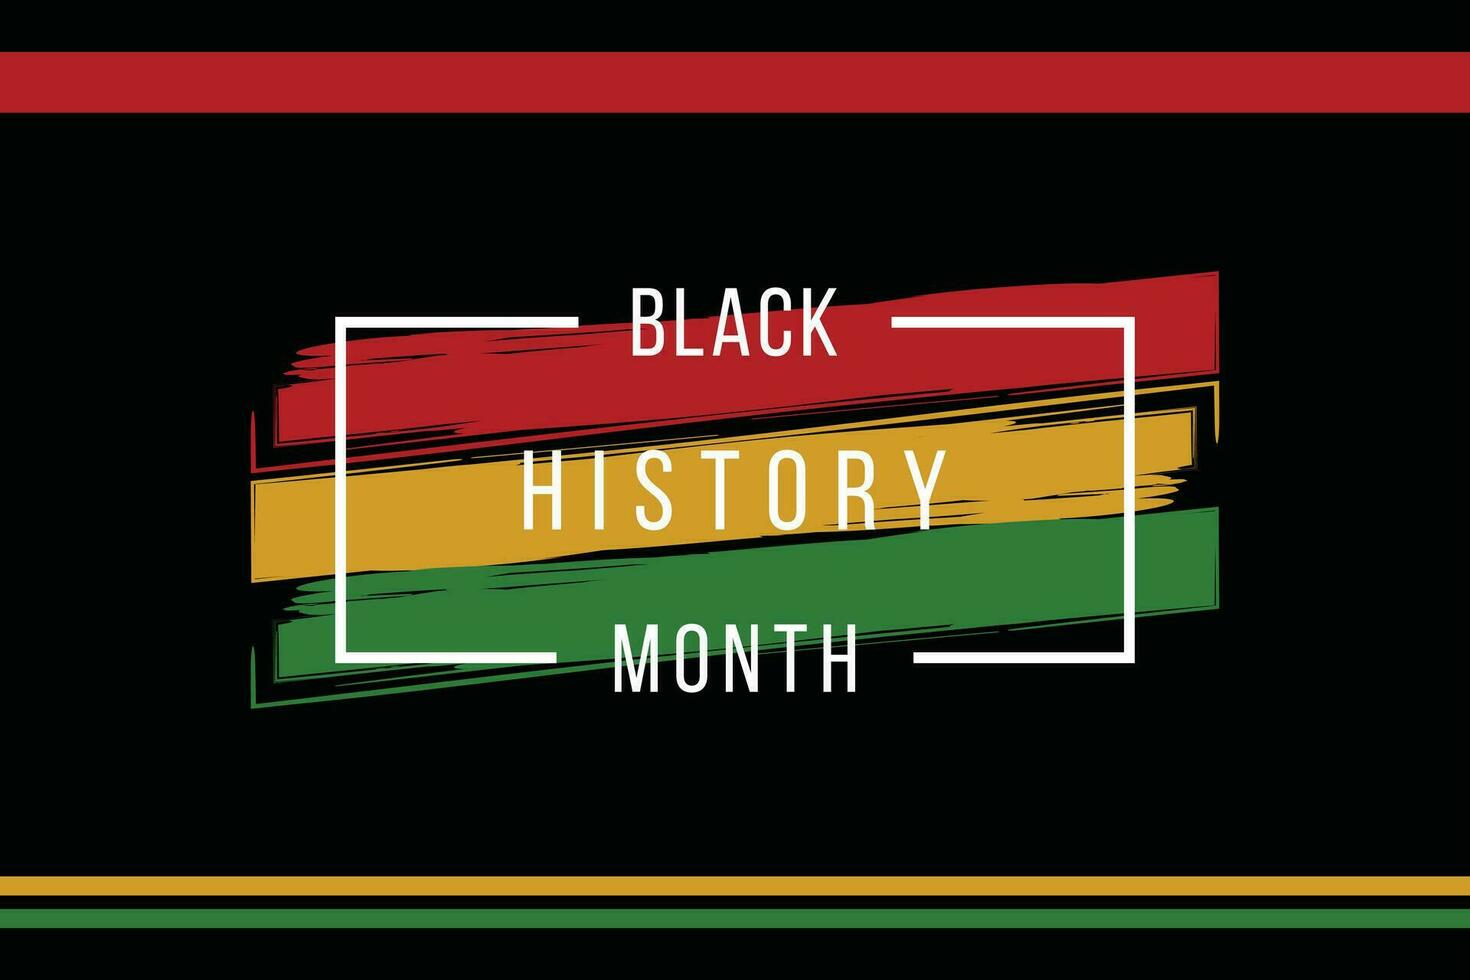 Black history month celebrate design vector background template